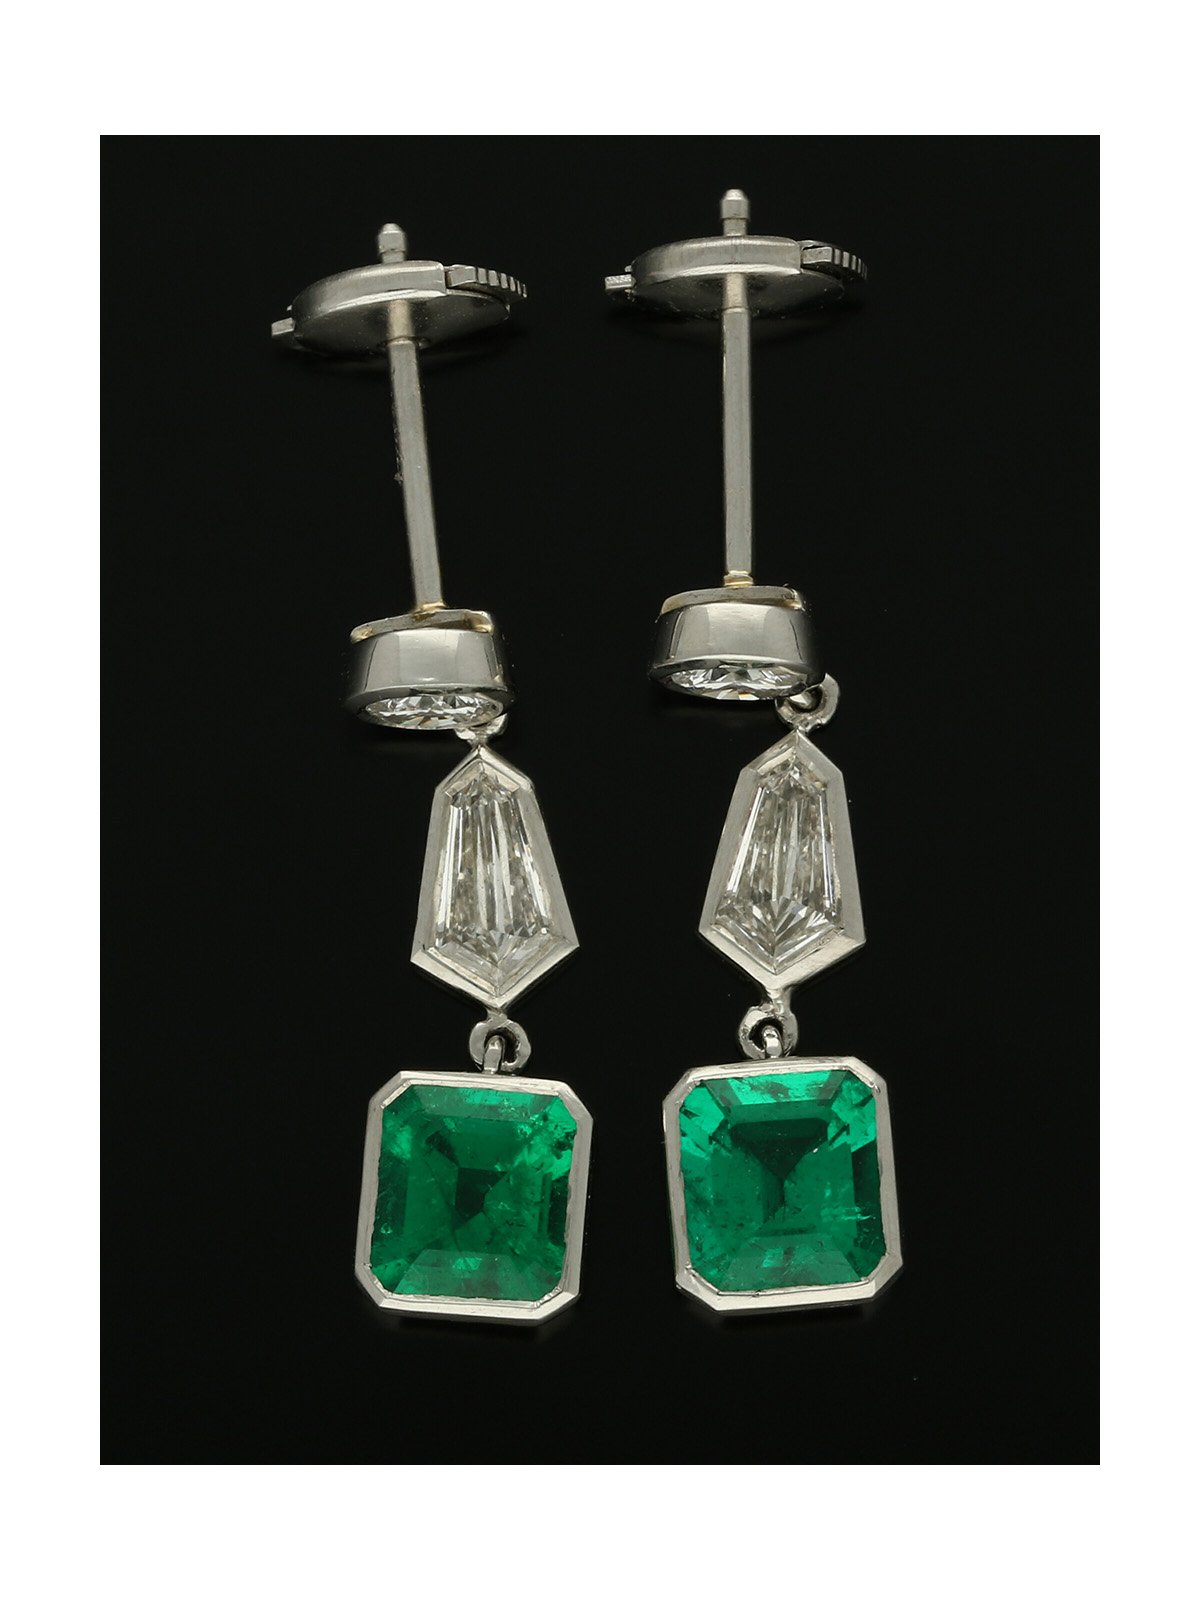 Emerald and Diamond Drop Earrings in Platinum